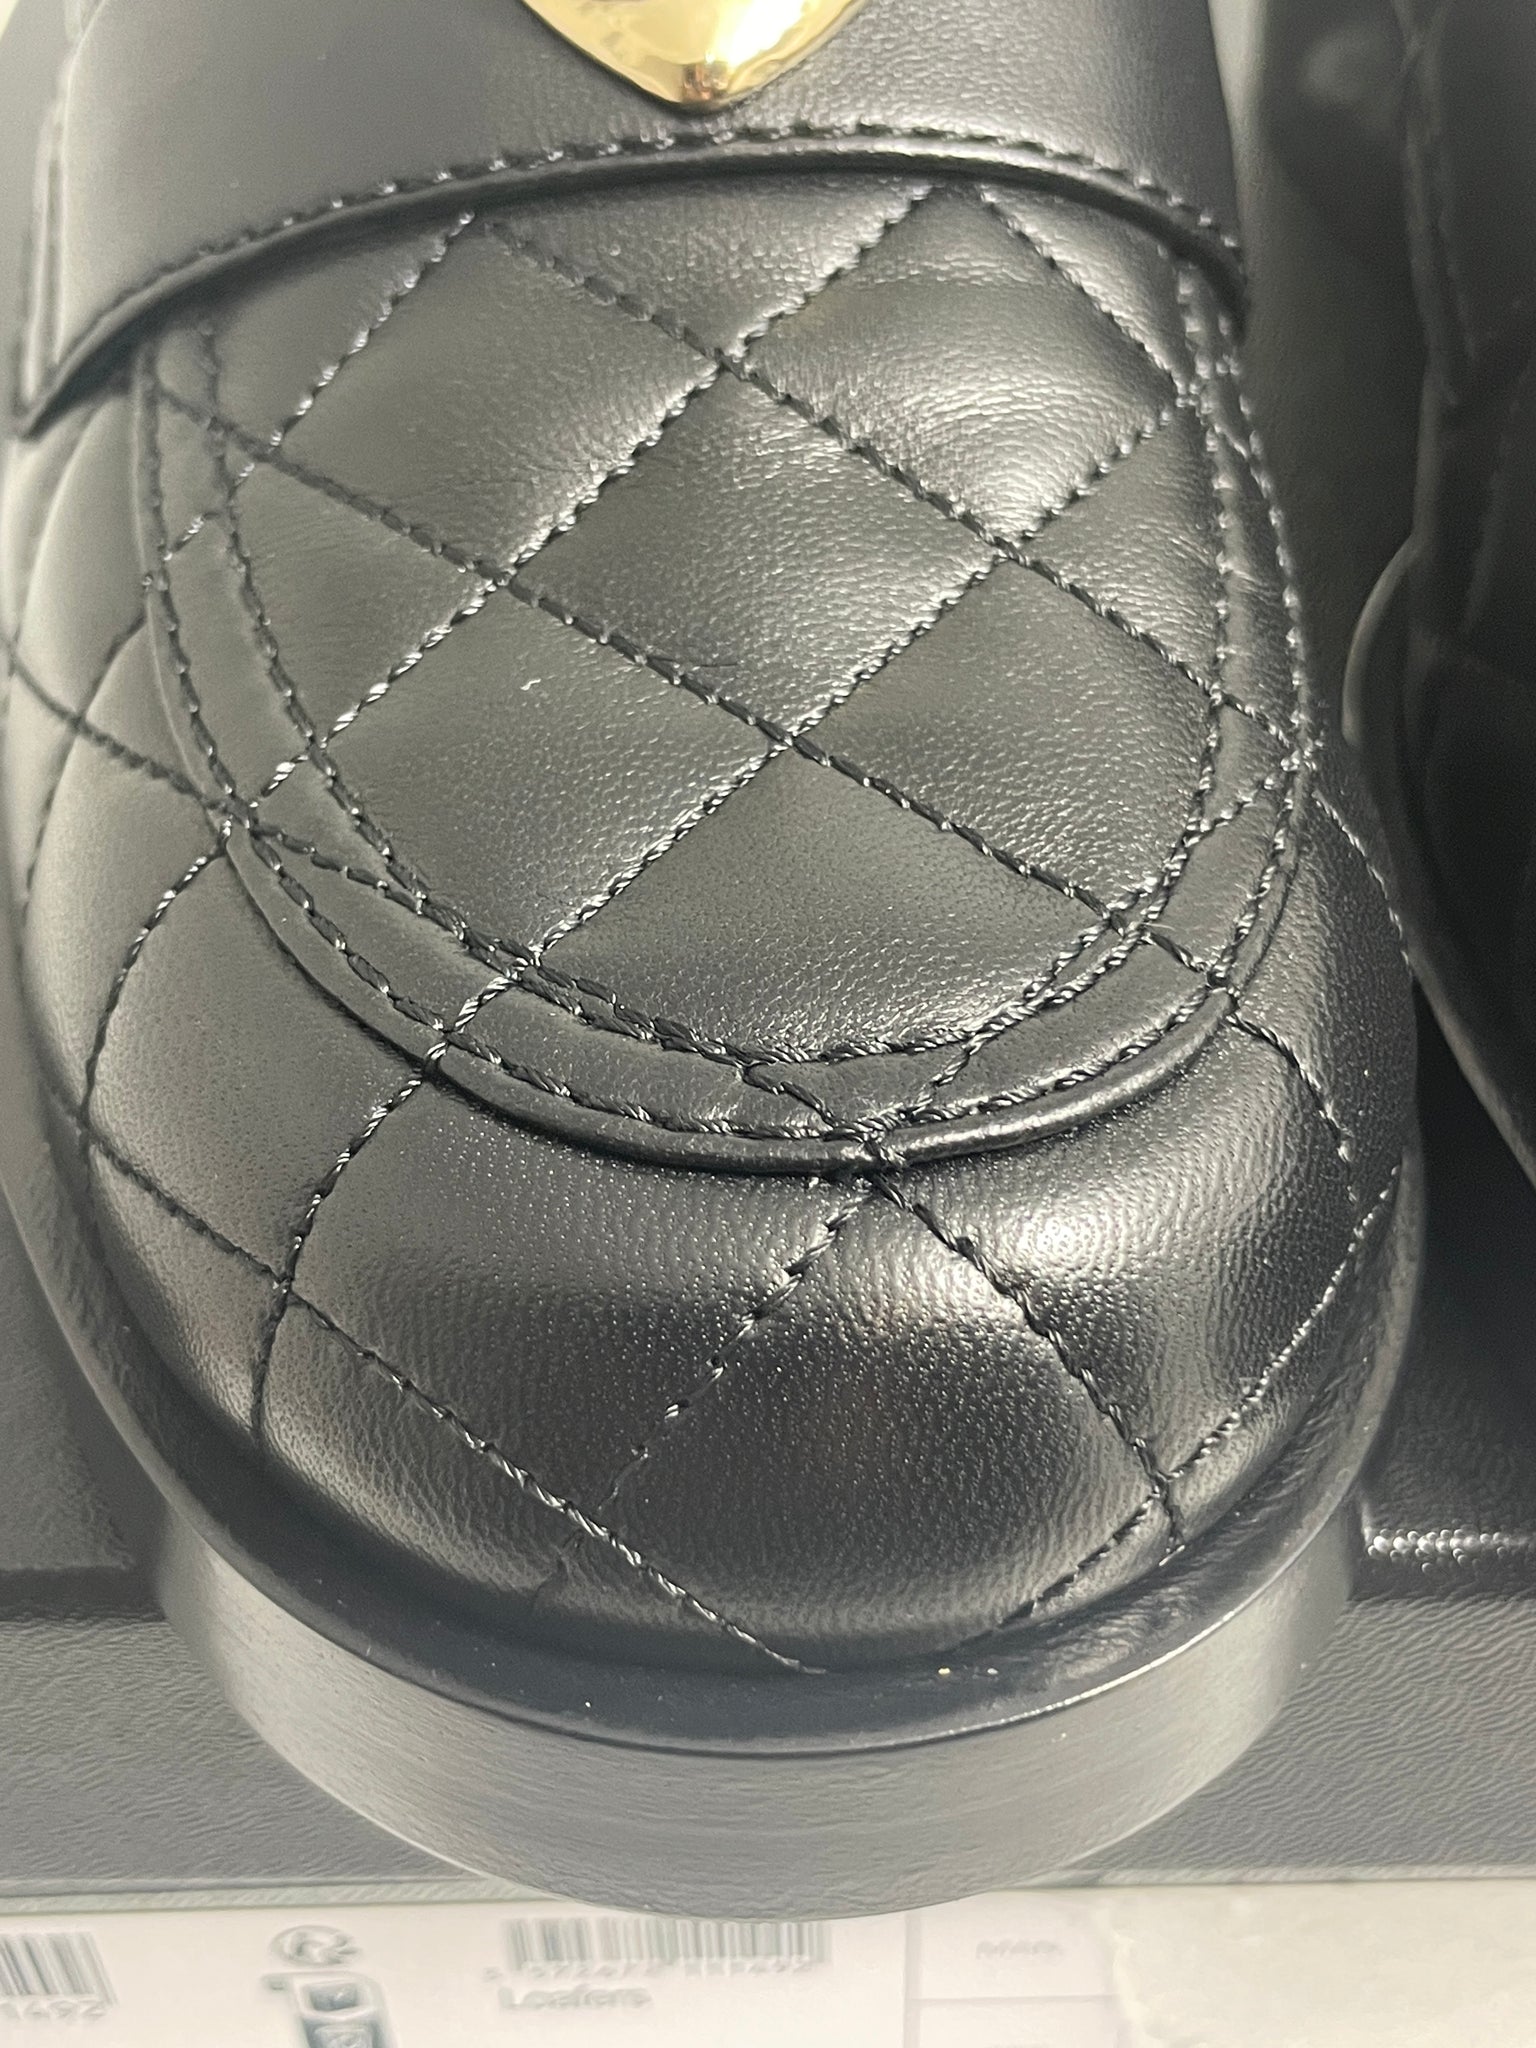 Chanel Black Loafers – MILNY PARLON